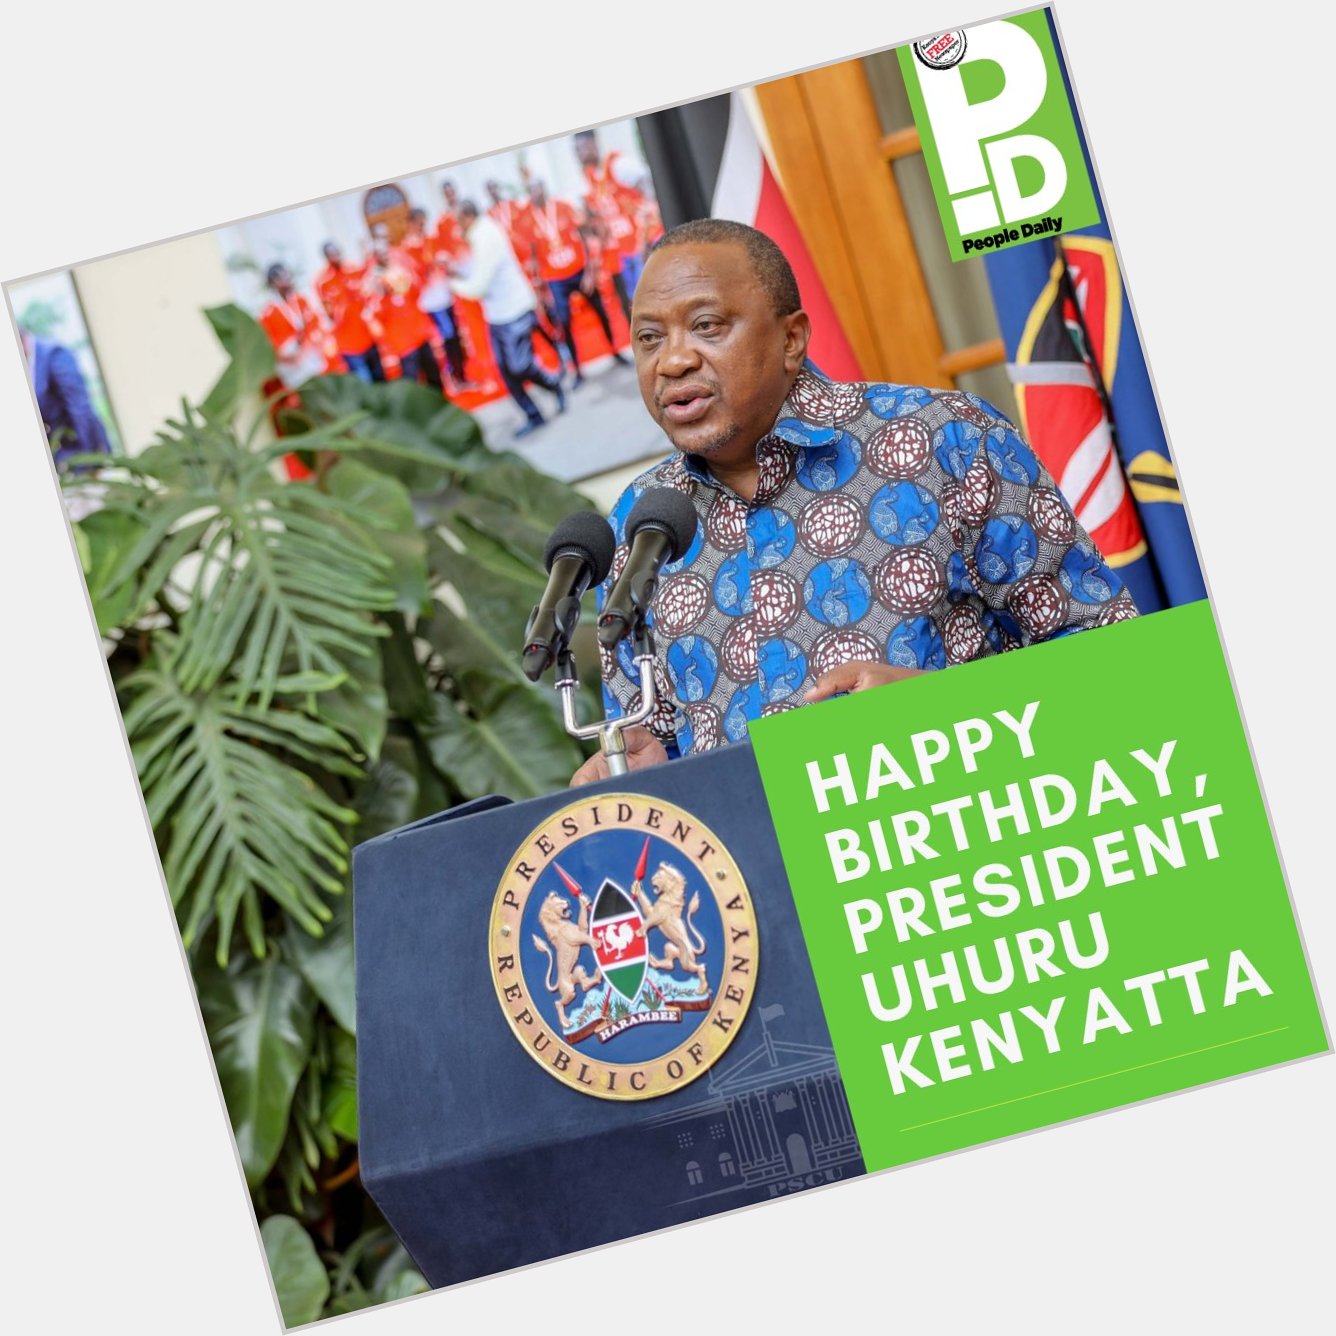 Happy birthday President Uhuru Kenyatta. What is your message to the President as he turns 60? 